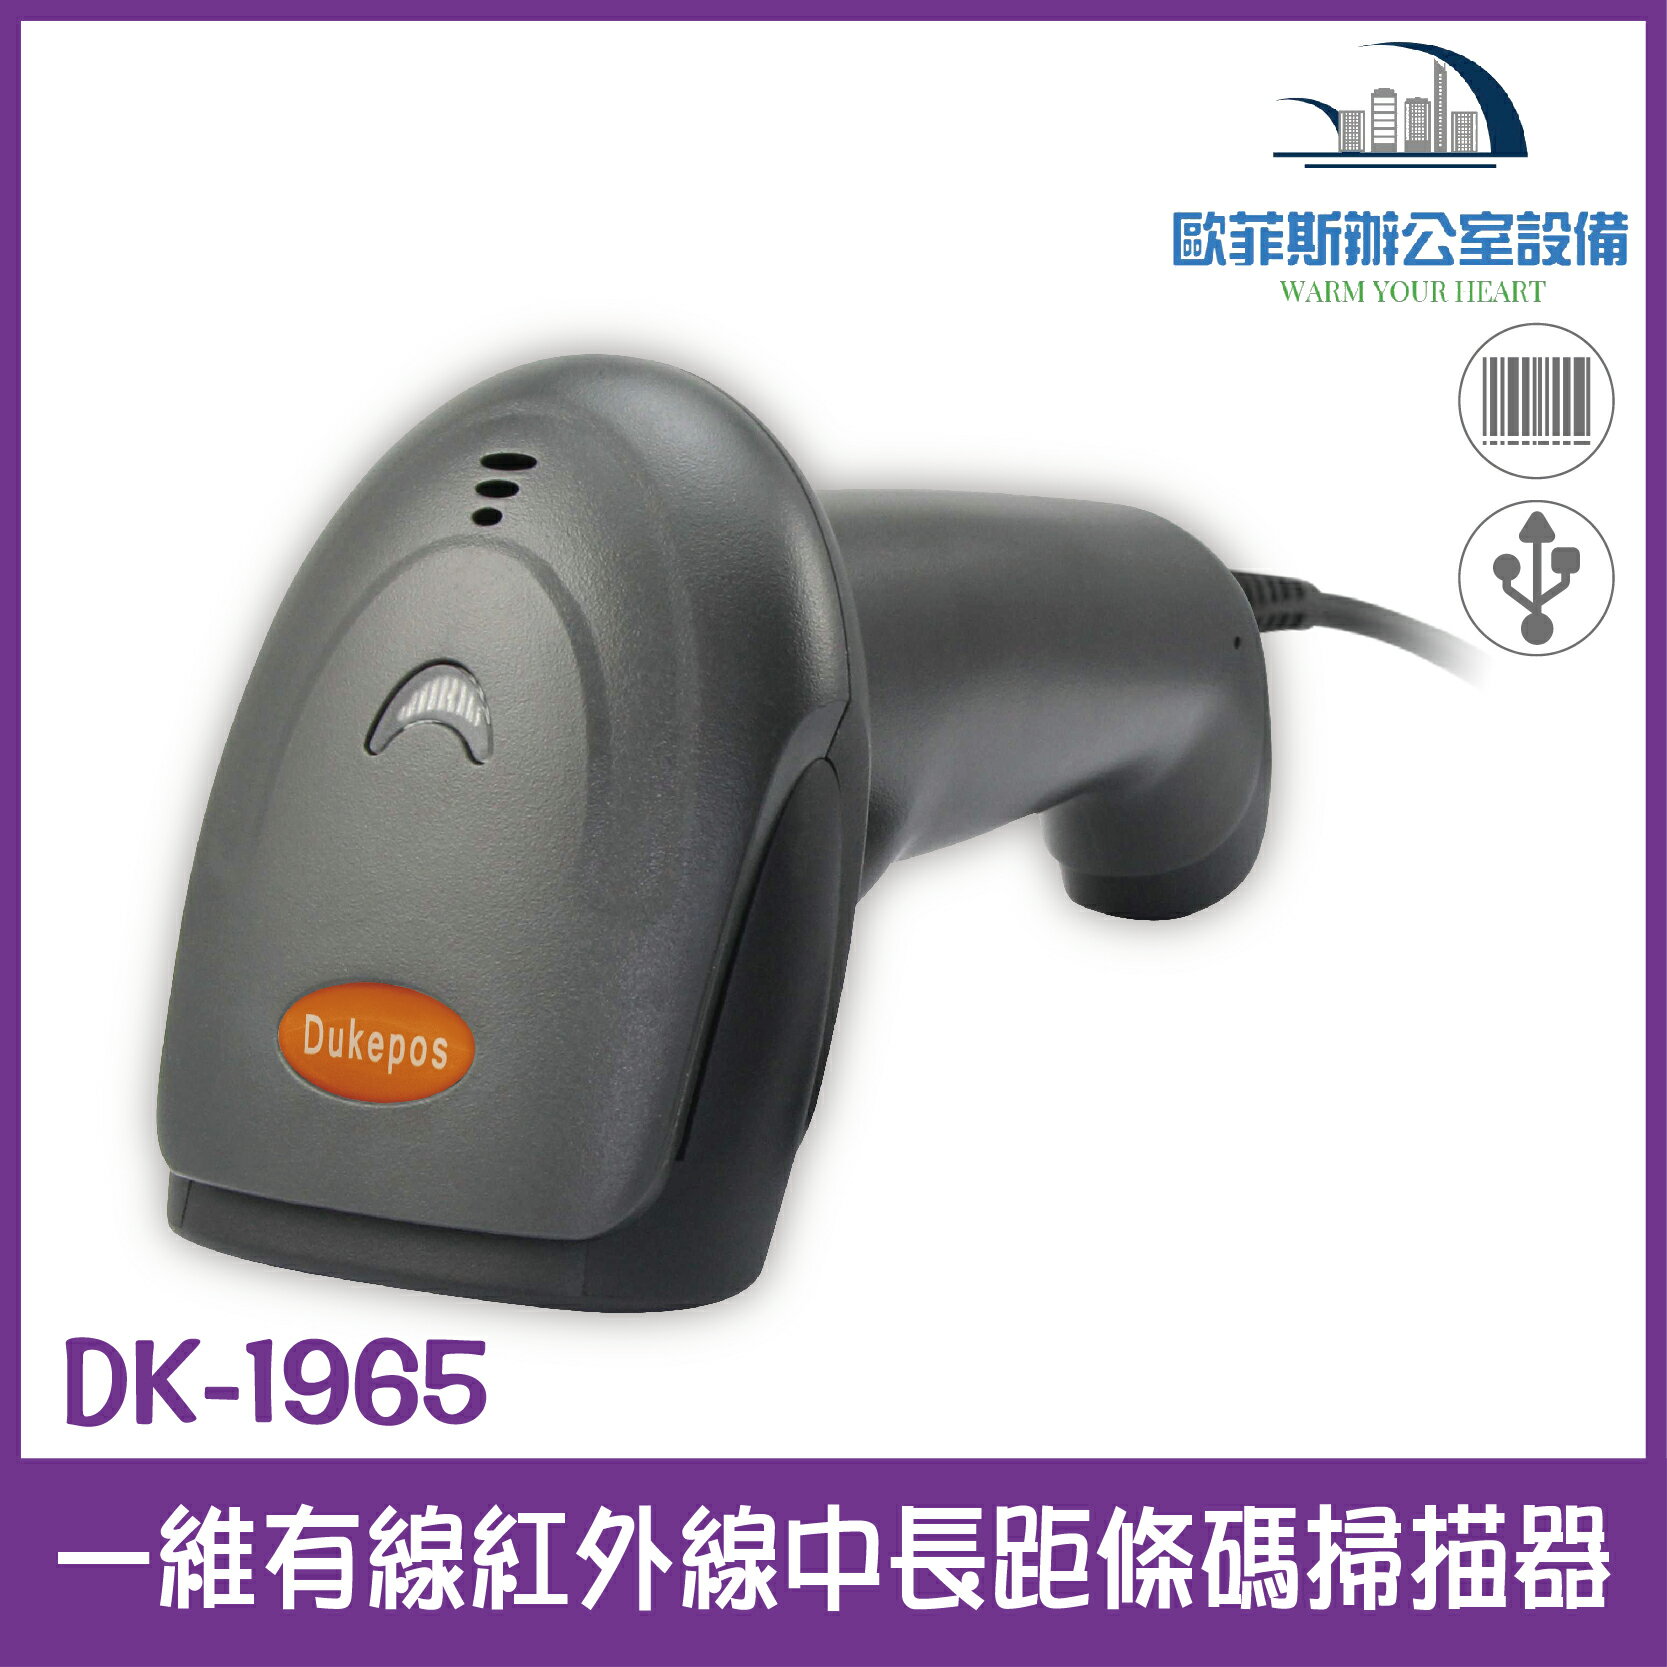 DK-1965自感堅固型 一維有線紅外線中長距條碼掃描器 可讀手機或是螢幕上的一維條碼 USB介面 送支架 台灣現貨含稅